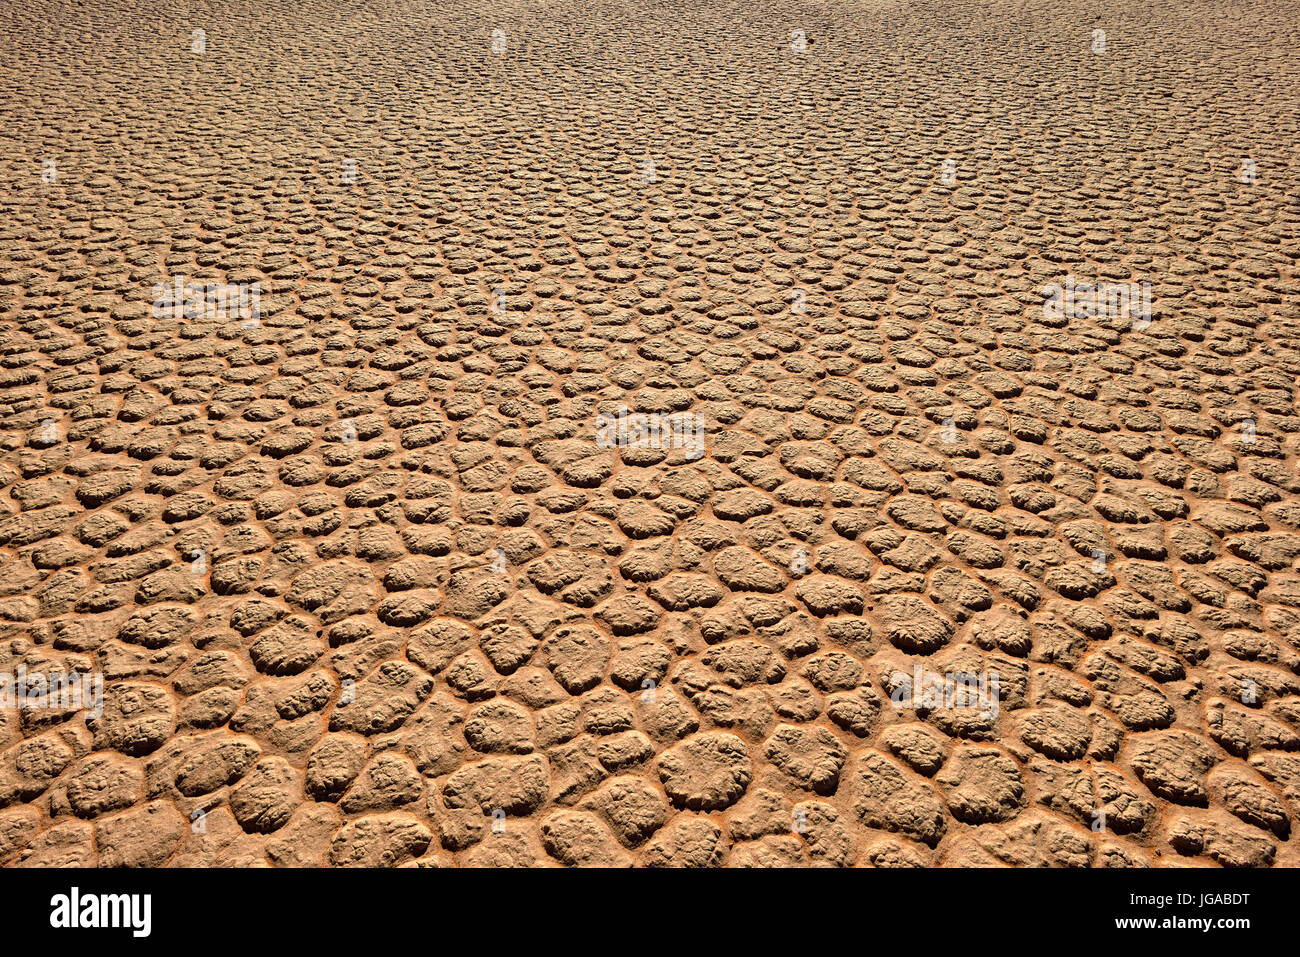 Cracked mud patterns on the playa, Tassili n'Ajjer National Park, UNESCO World Heritage Site, Sahara desert, Algeria Stock Photo